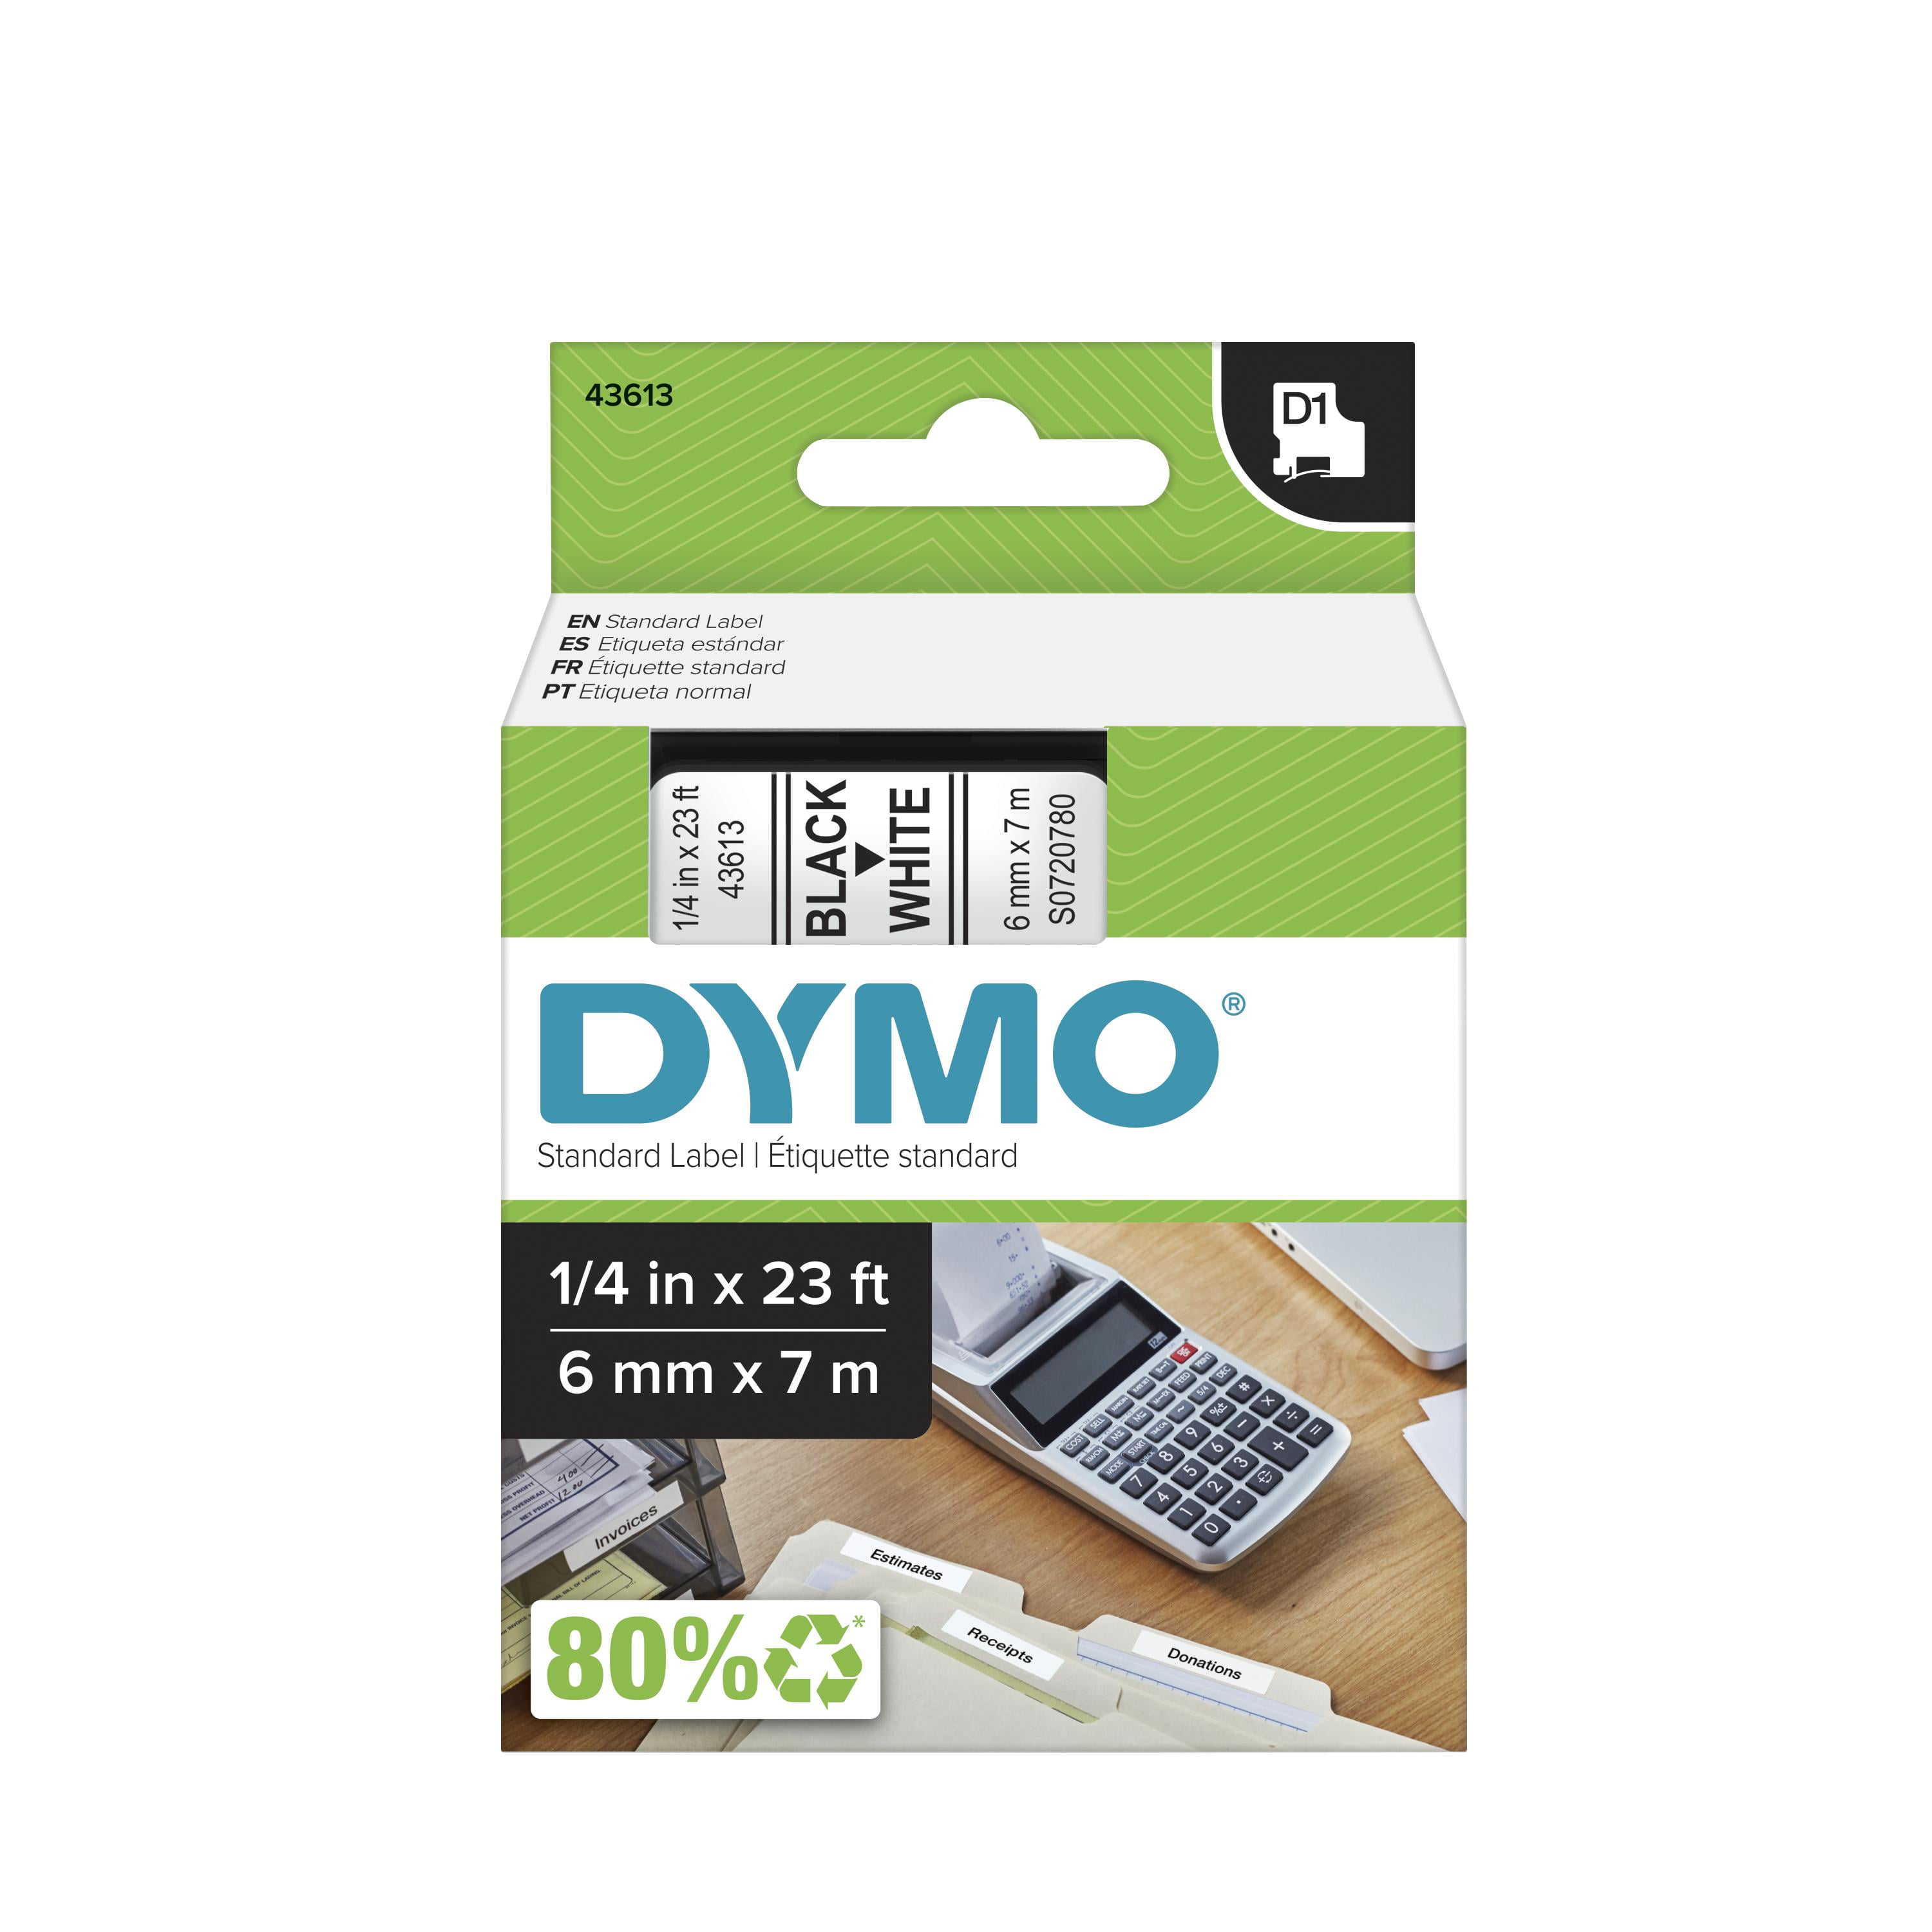 DYMO D1 Standard - Polyester - - black on white - Roll (1/4 in x 23 ft) 1 roll(s) label tape - for LabelMANAGER 220, 260, 280, 360, 420, 500, PnP, PnP; DYMO LabelWriter 450 - Walmart.com